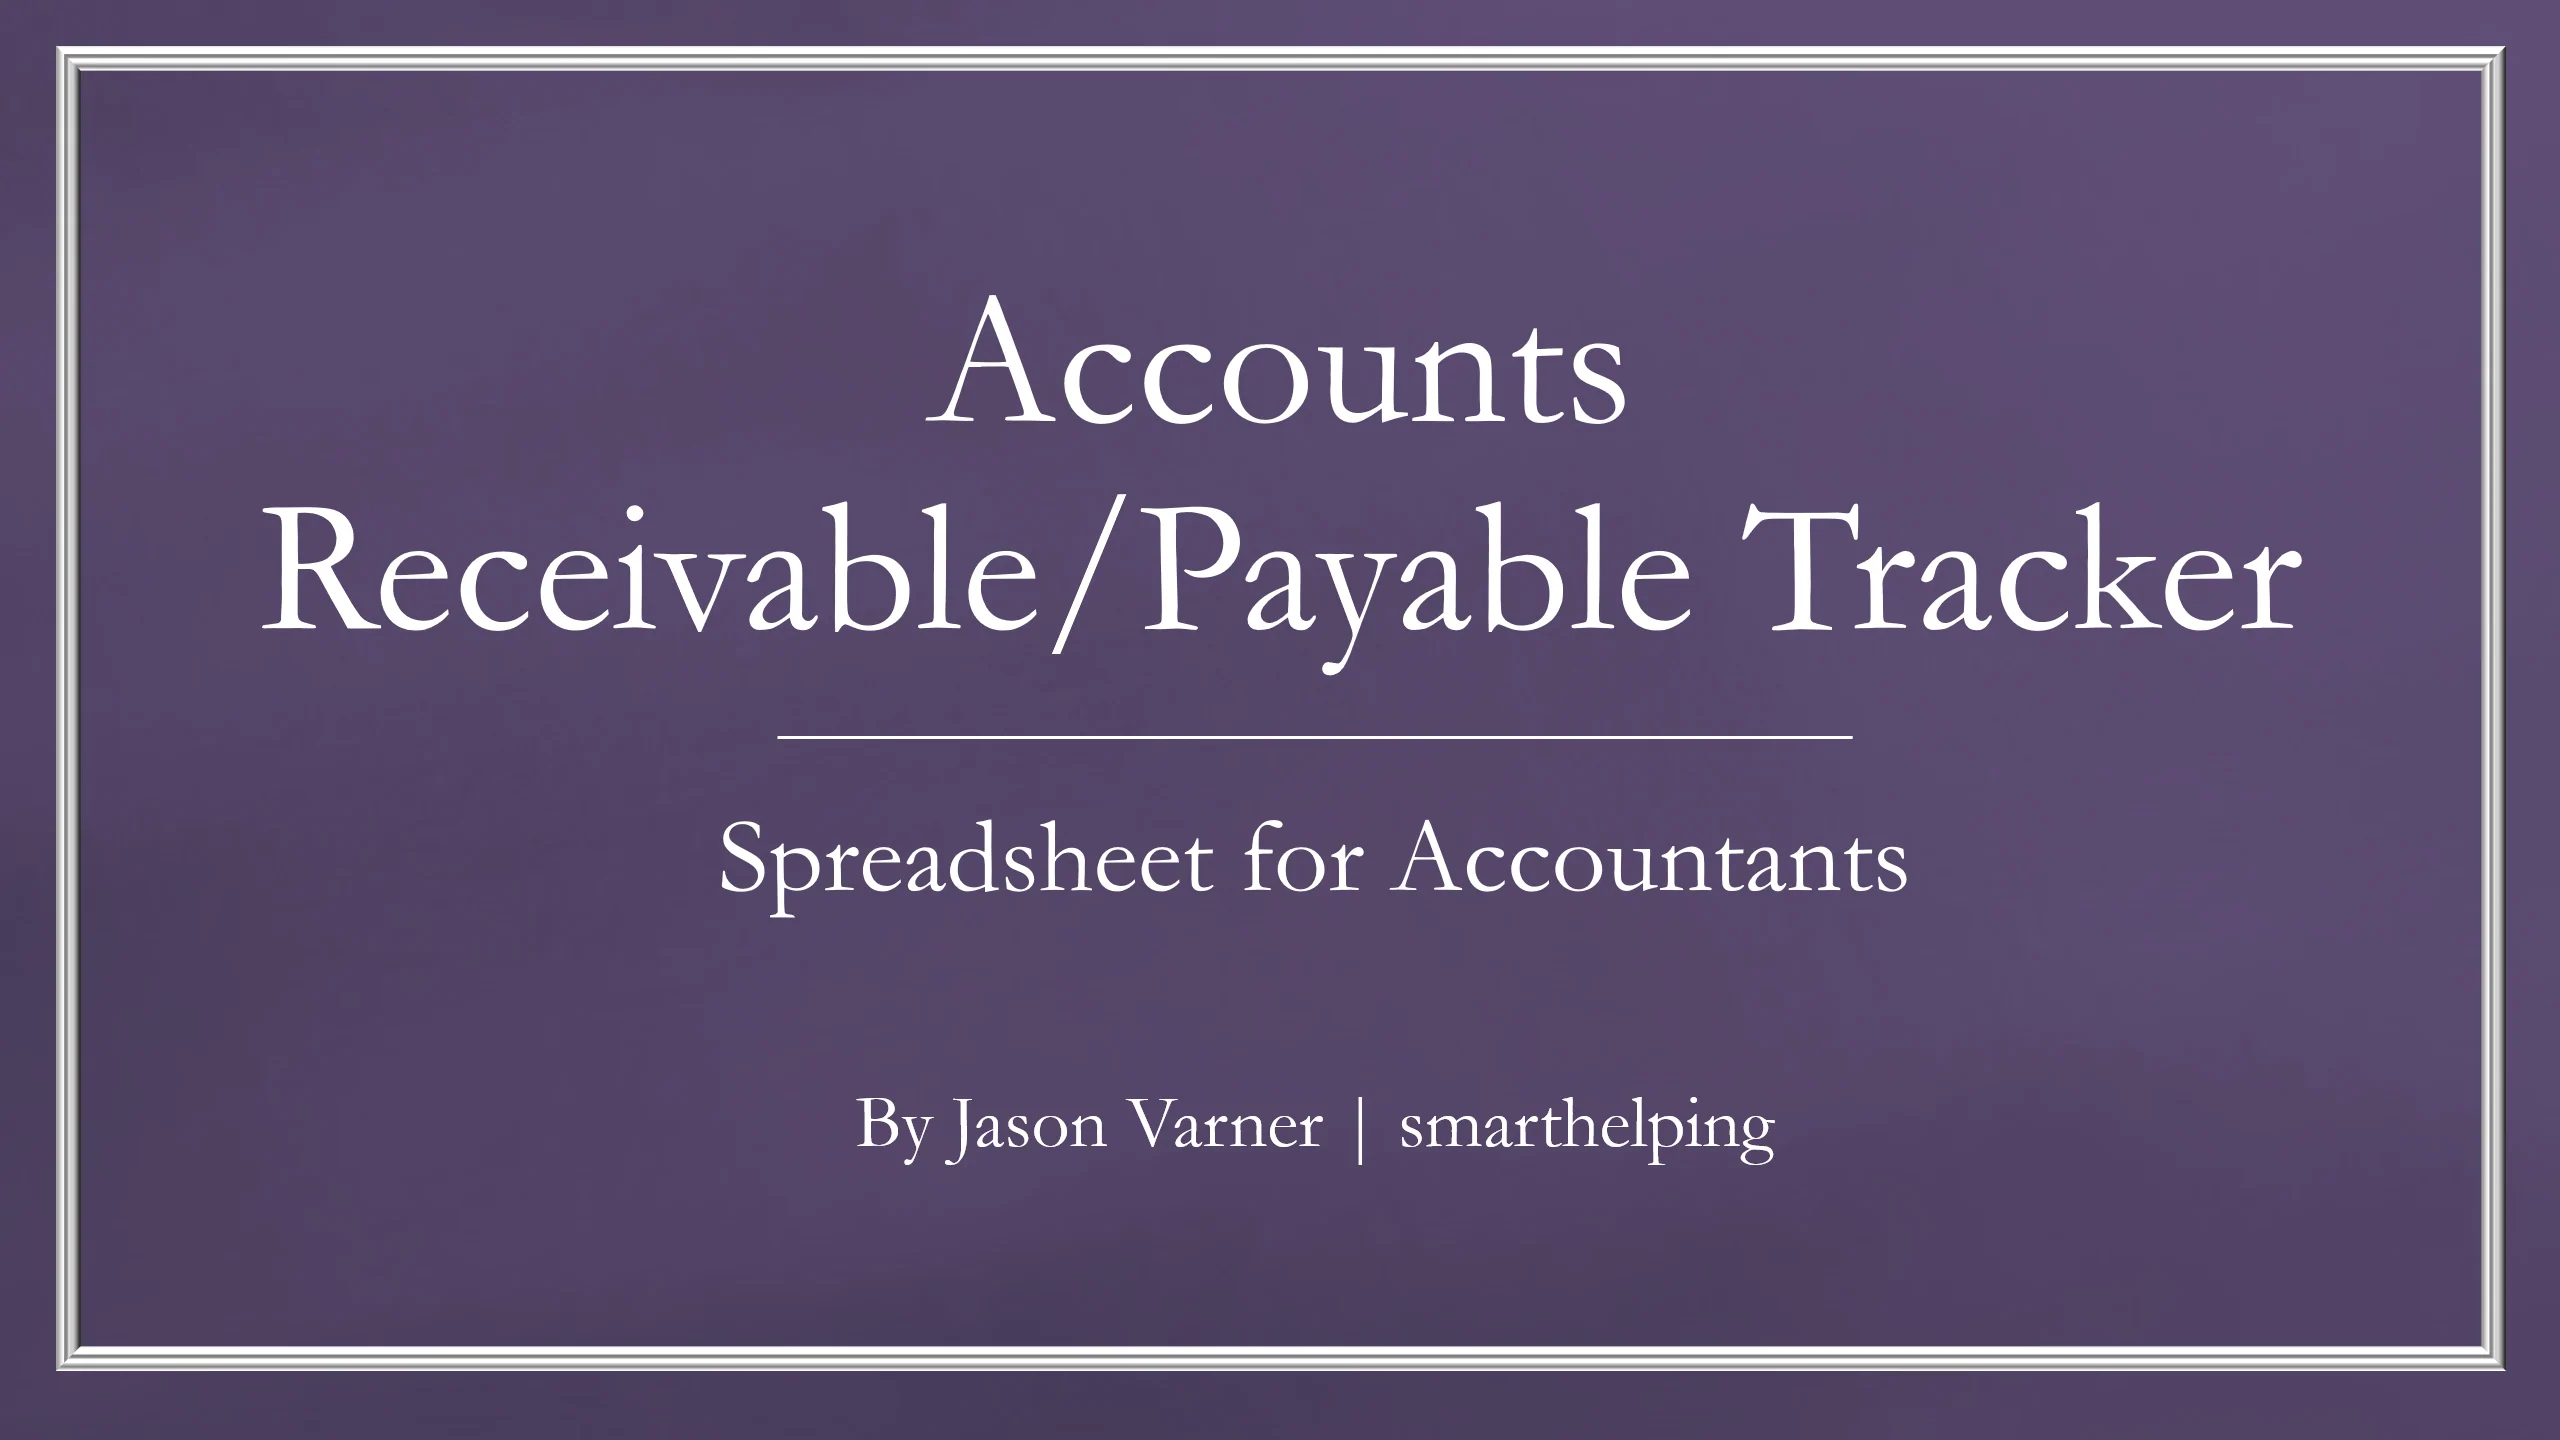 Accounts Receivable and Payable Tracker